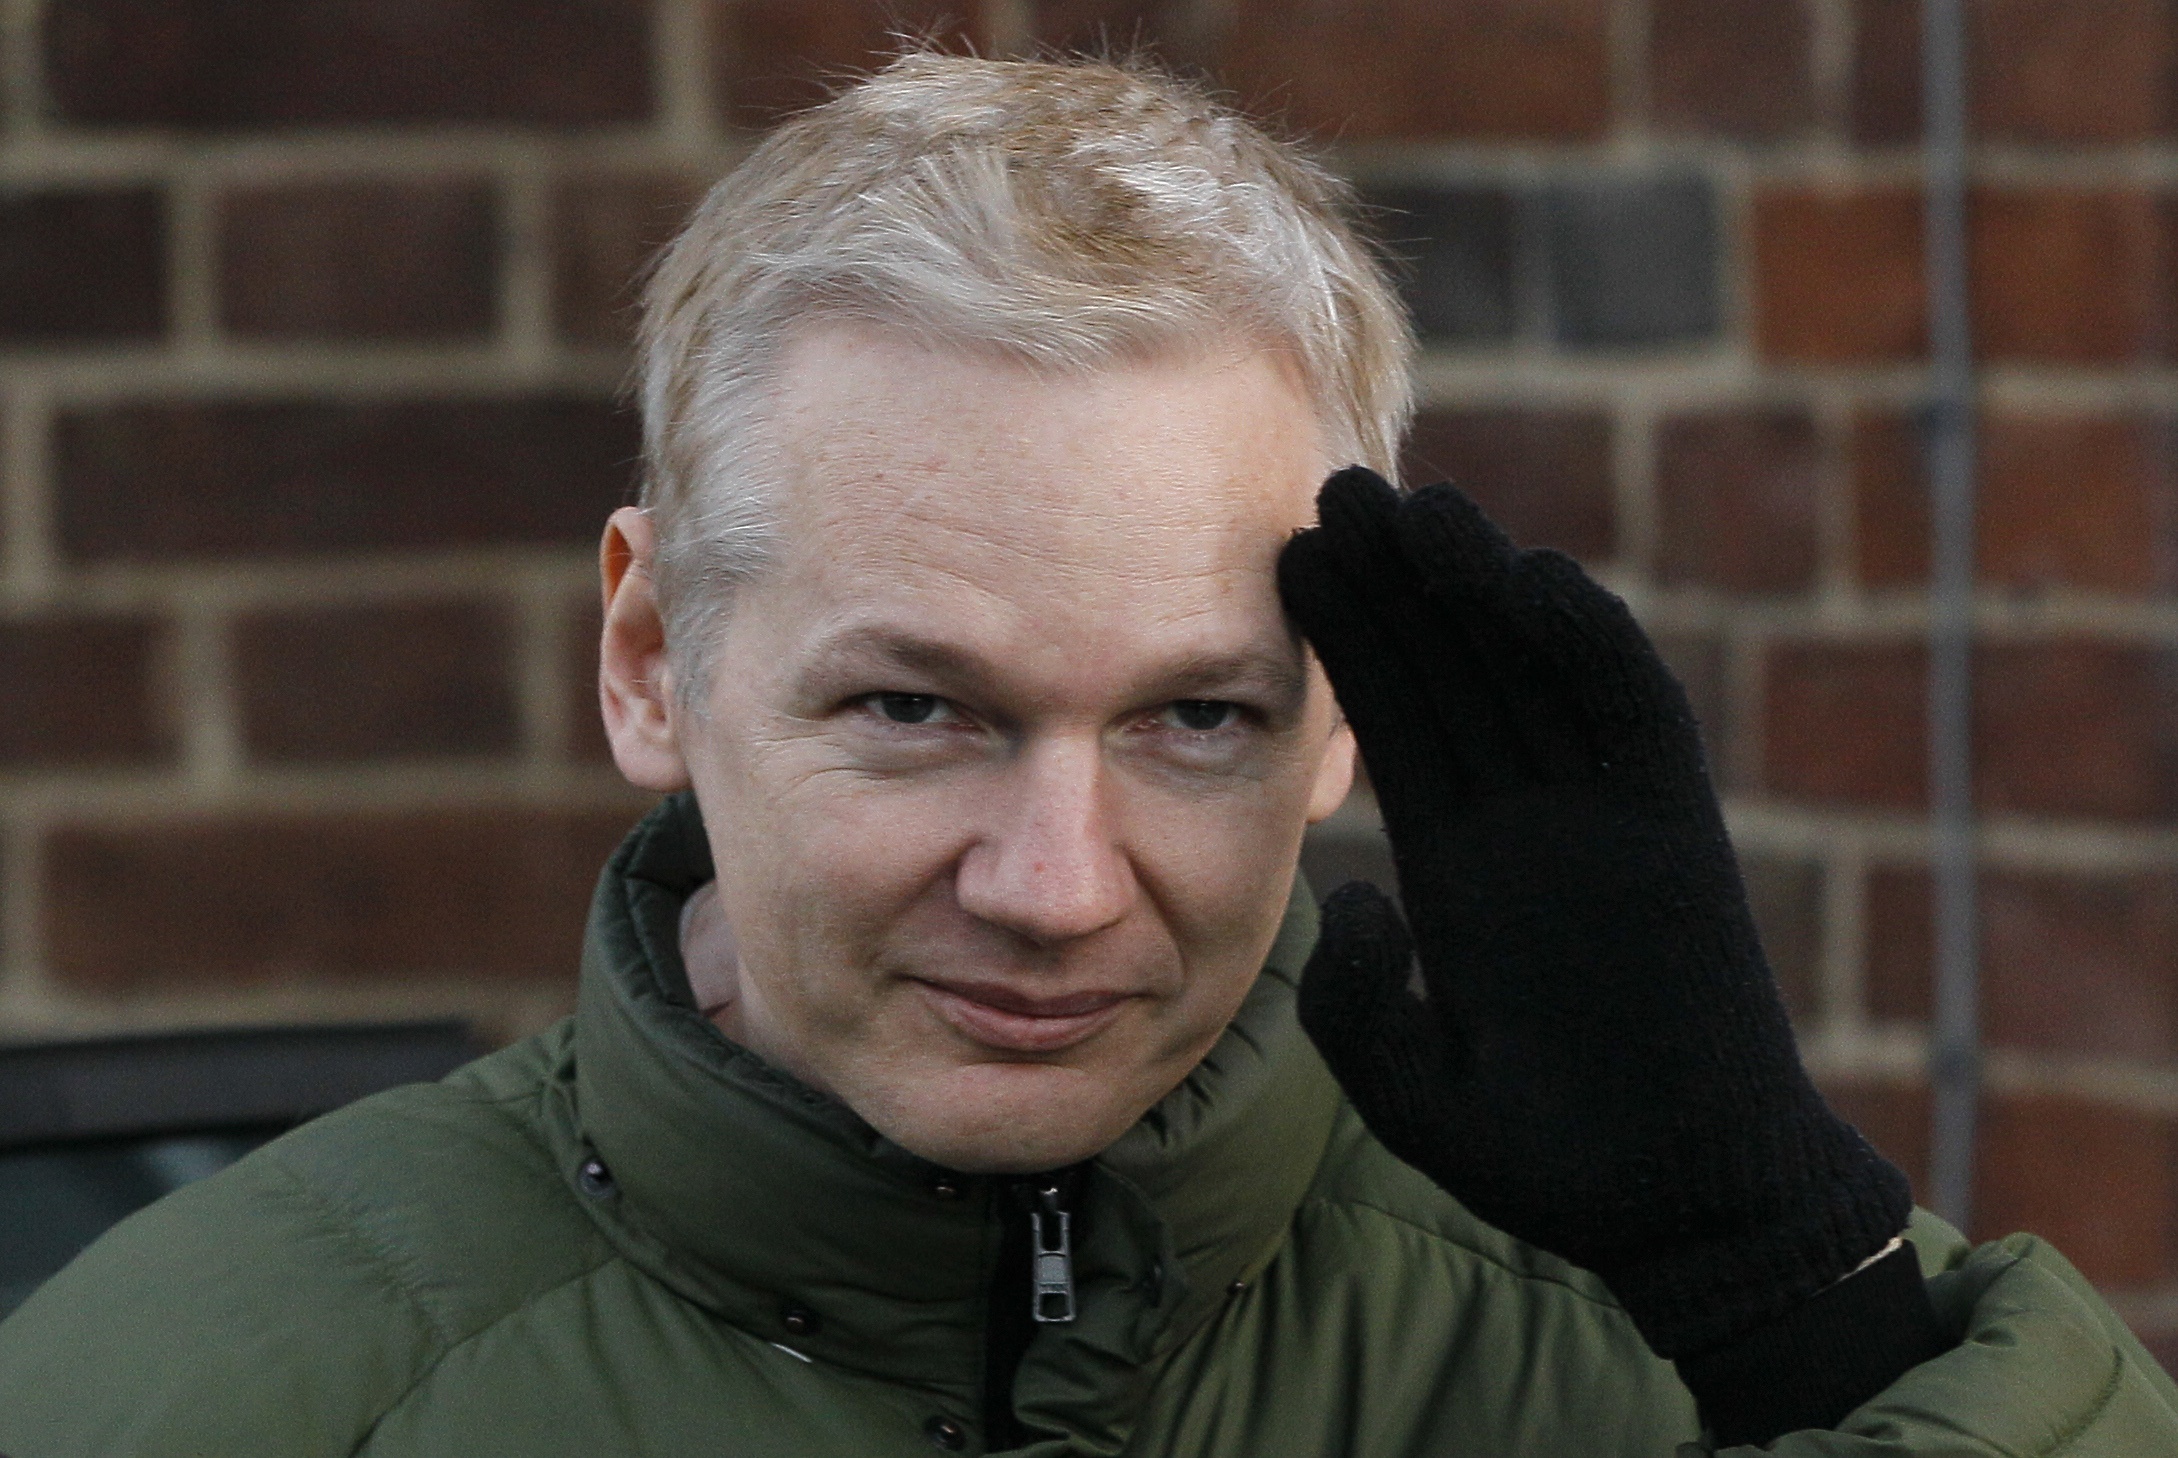 Våldtäkt , Sverige, Internet, Häktad, Sexualbrott, Julian Assange, Wikileaks